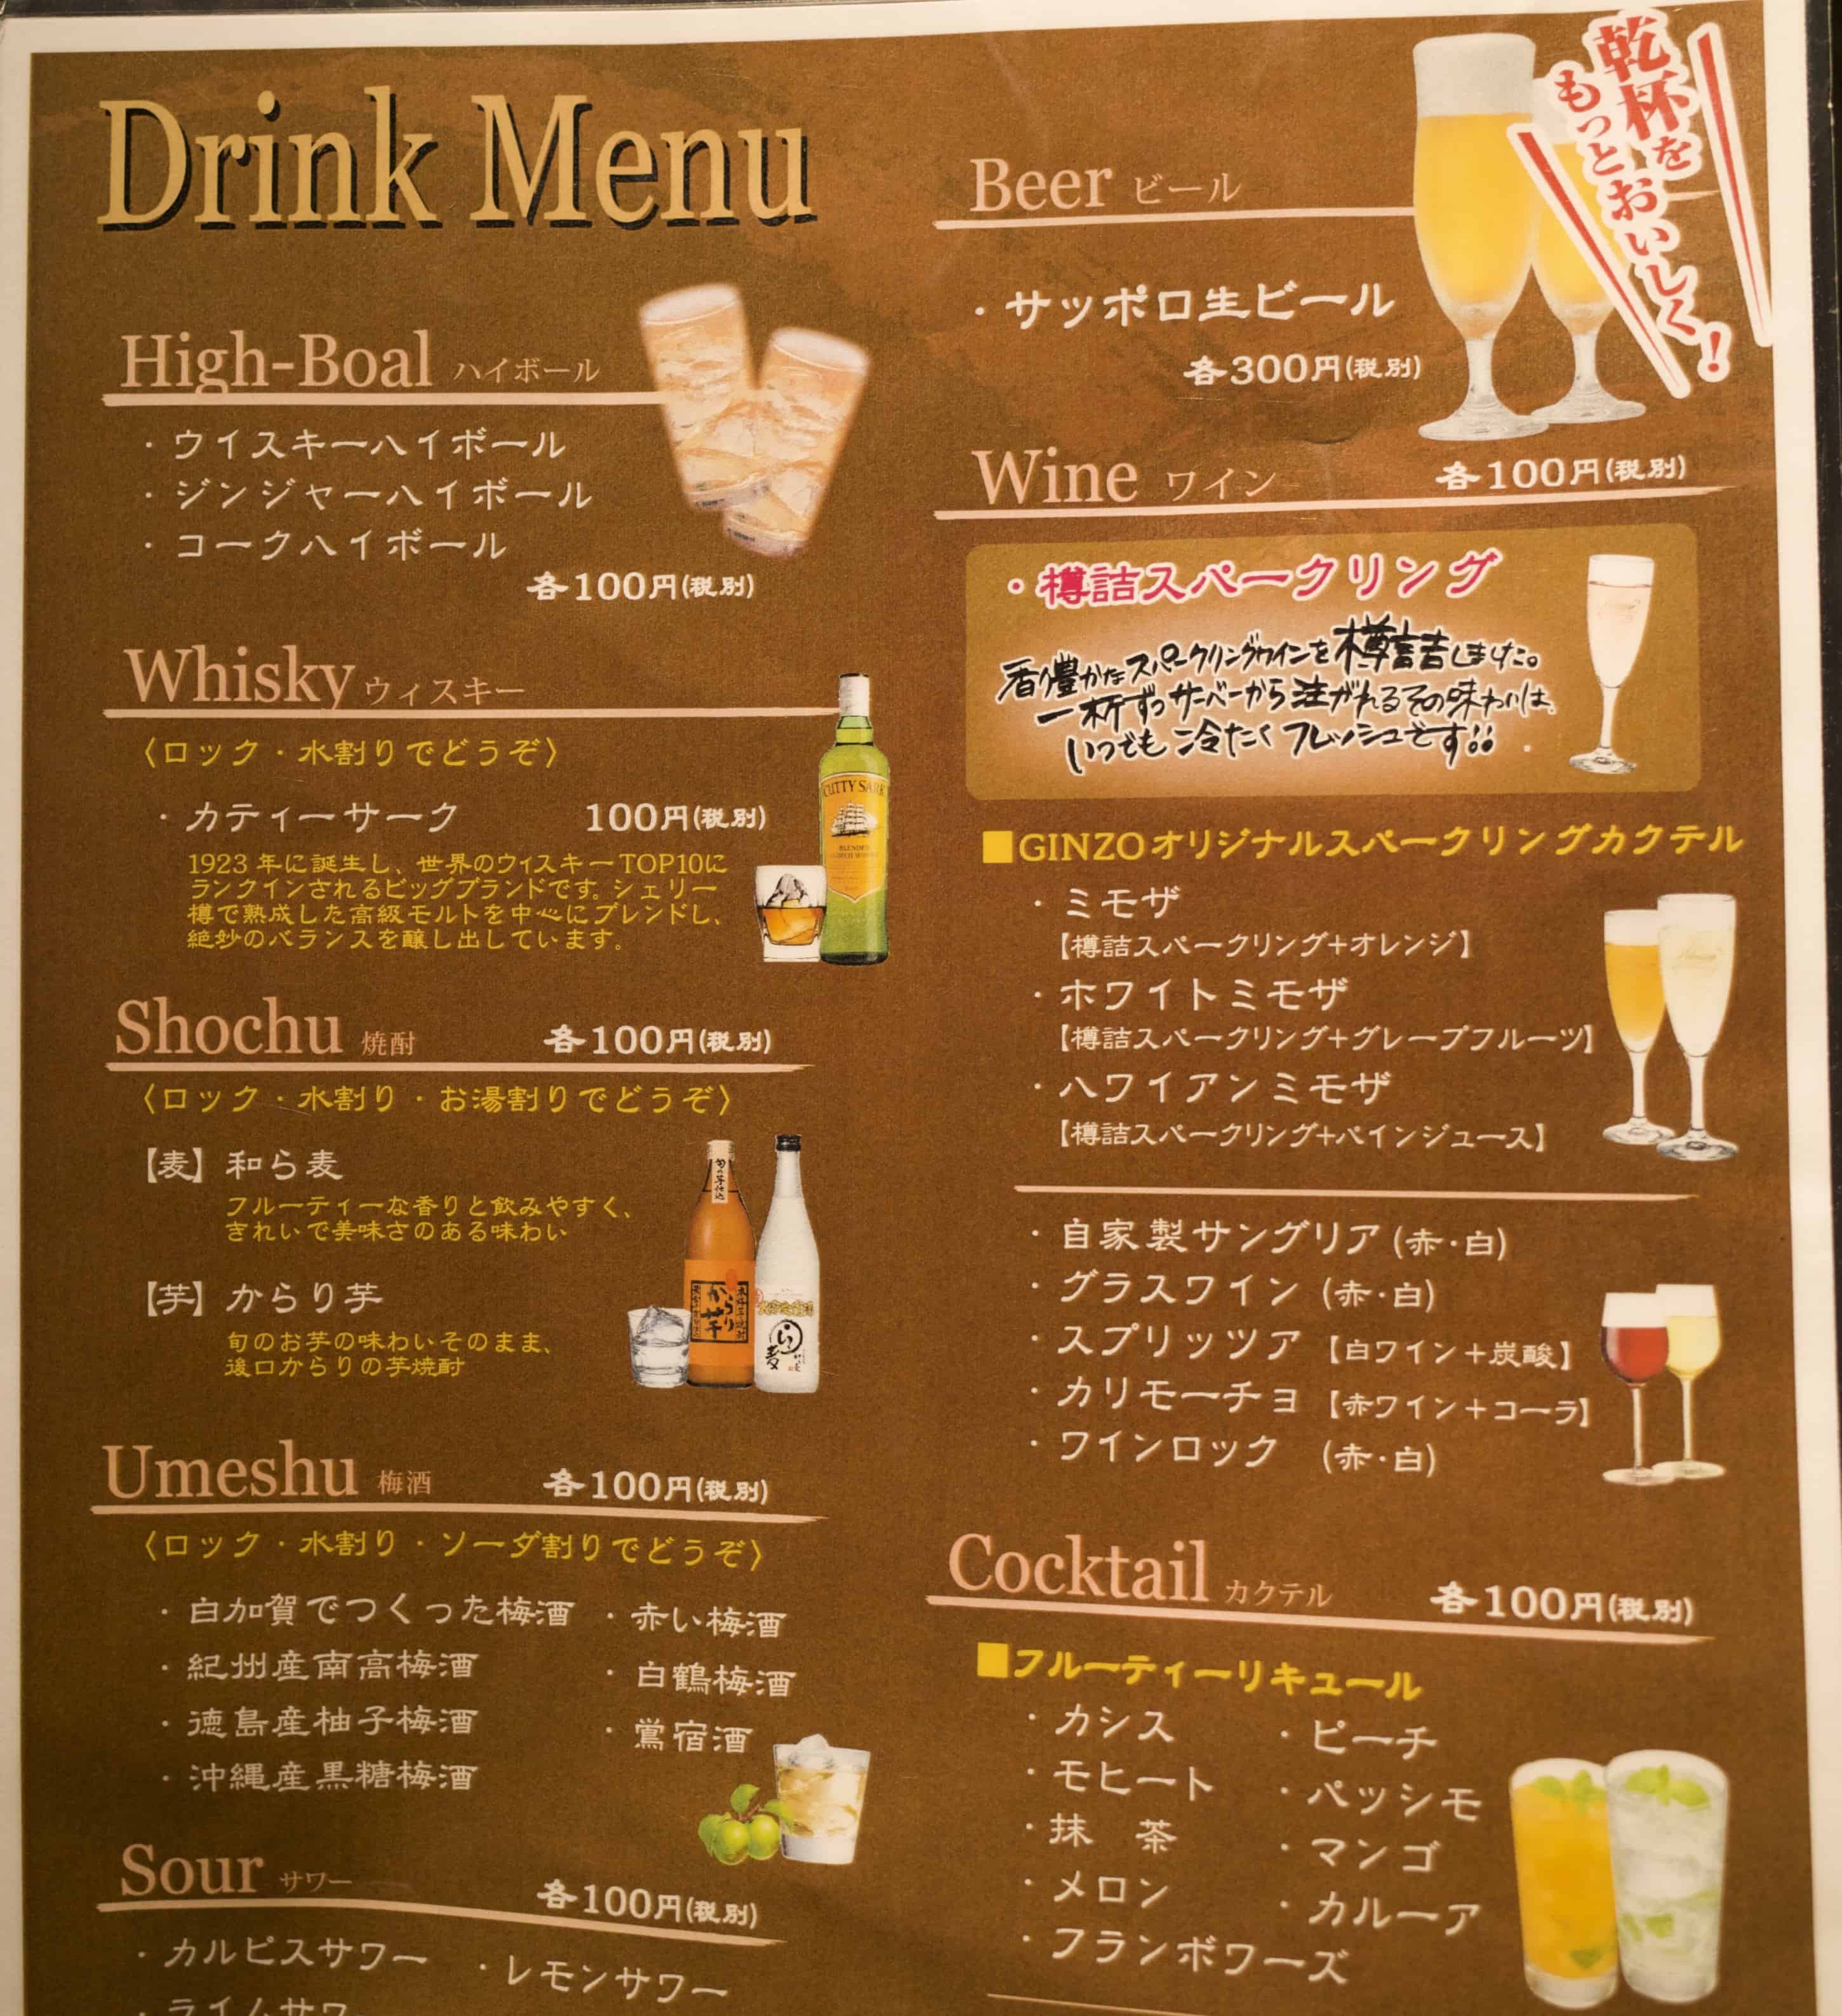 Drinks menu at Ginzo